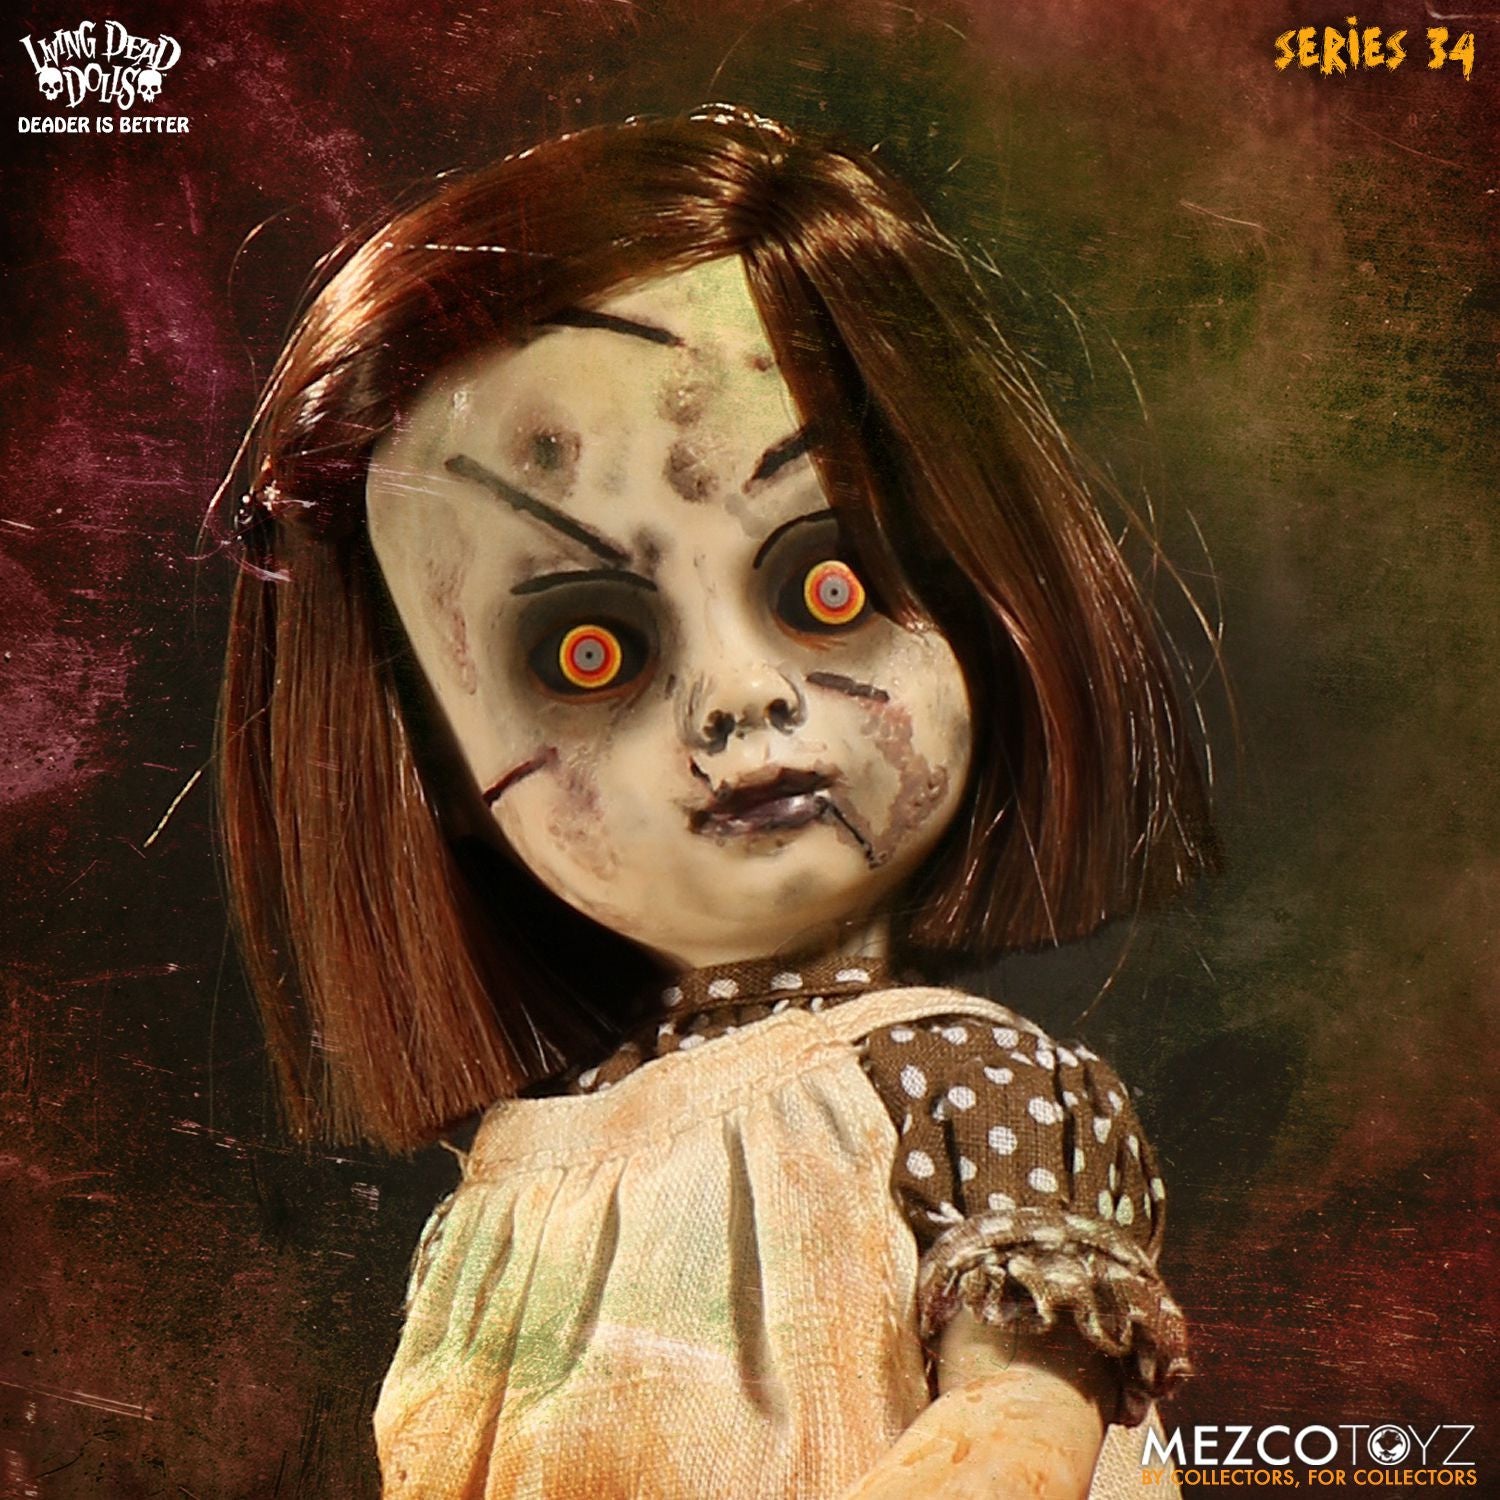 Mezco - Living Dead Dolls - Series 34 (Set of 5) - Marvelous Toys